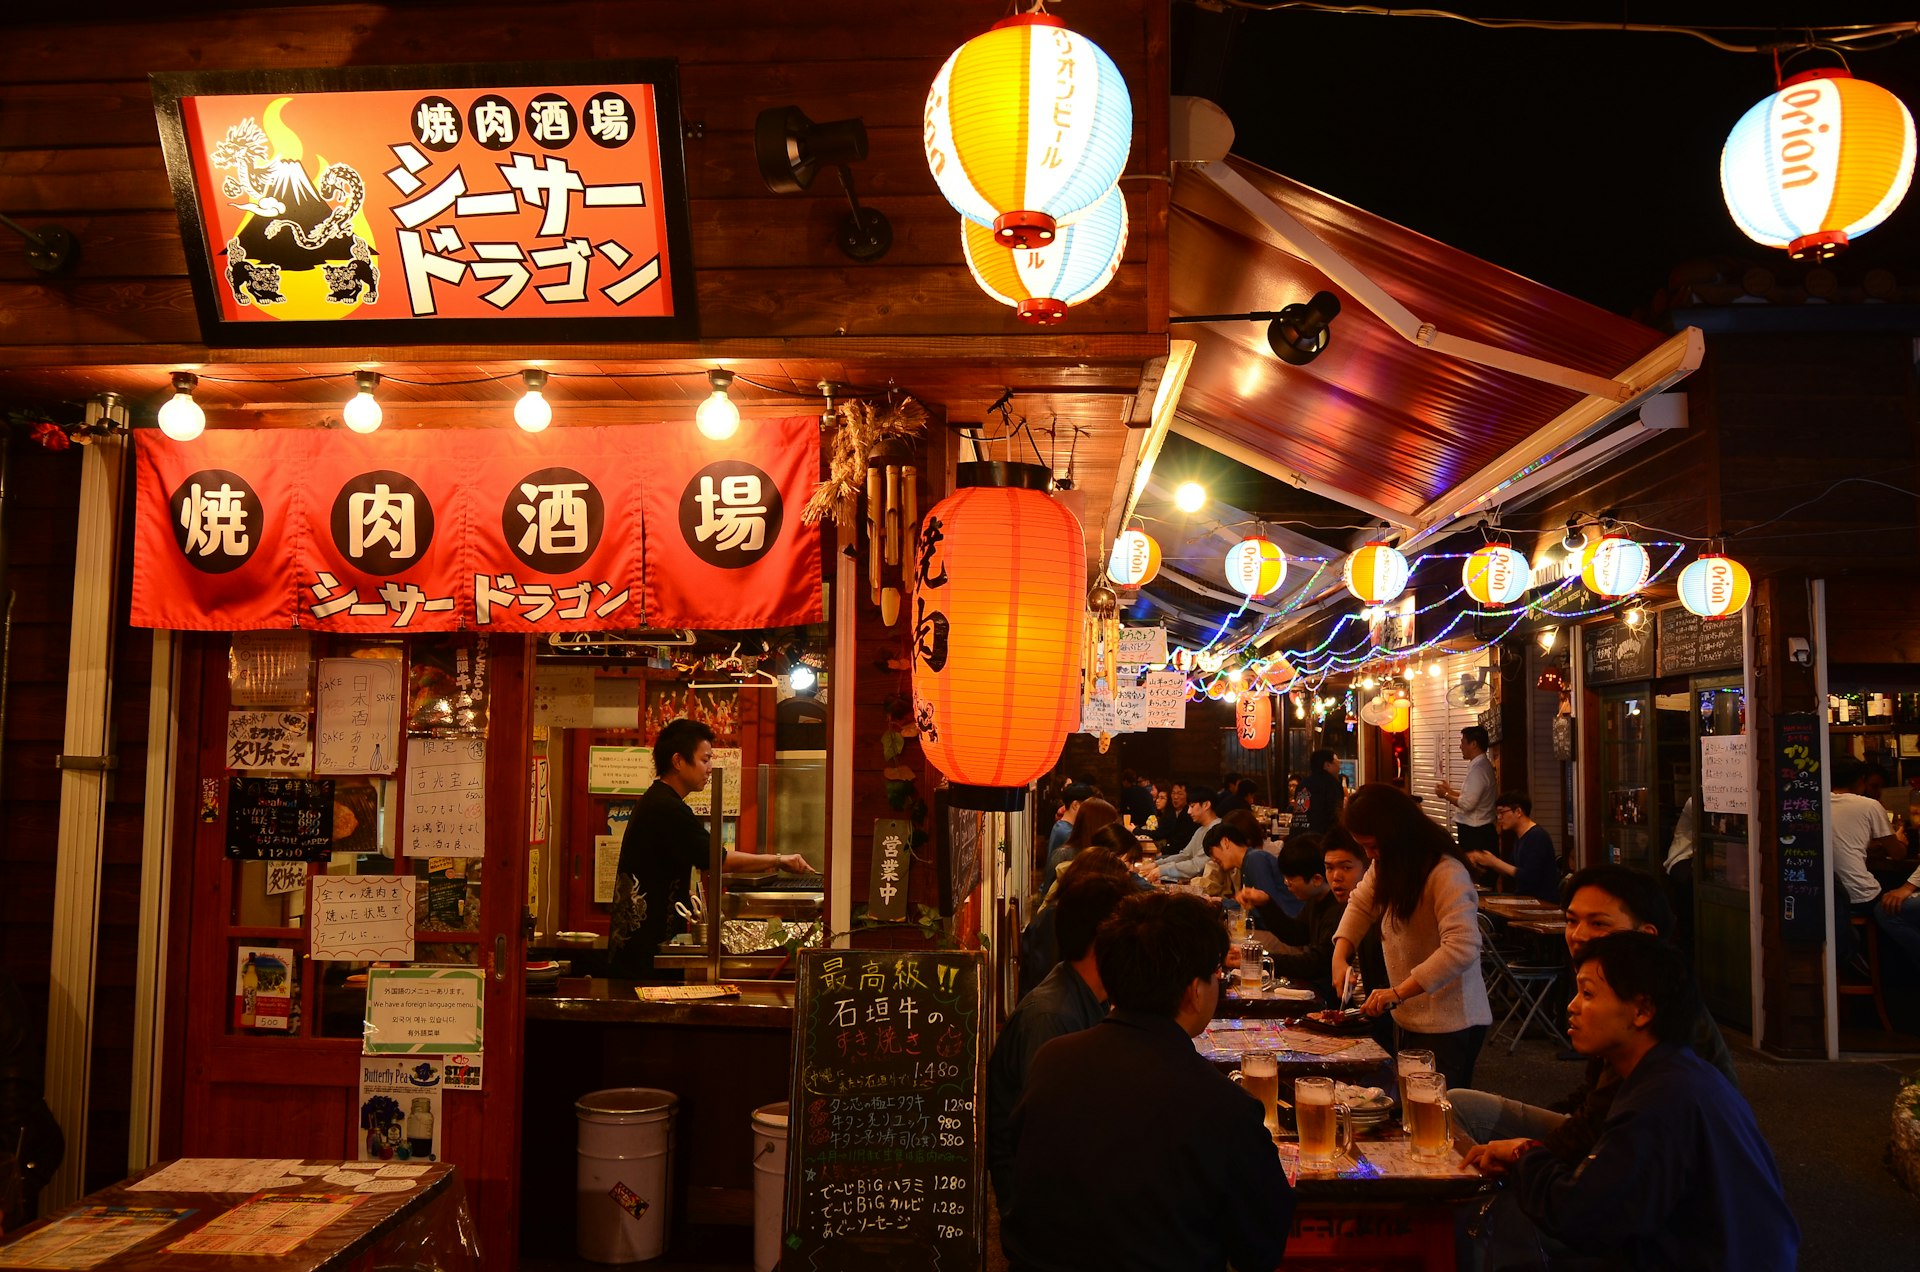 People ordering at a Yatai Street food vendor in Japan